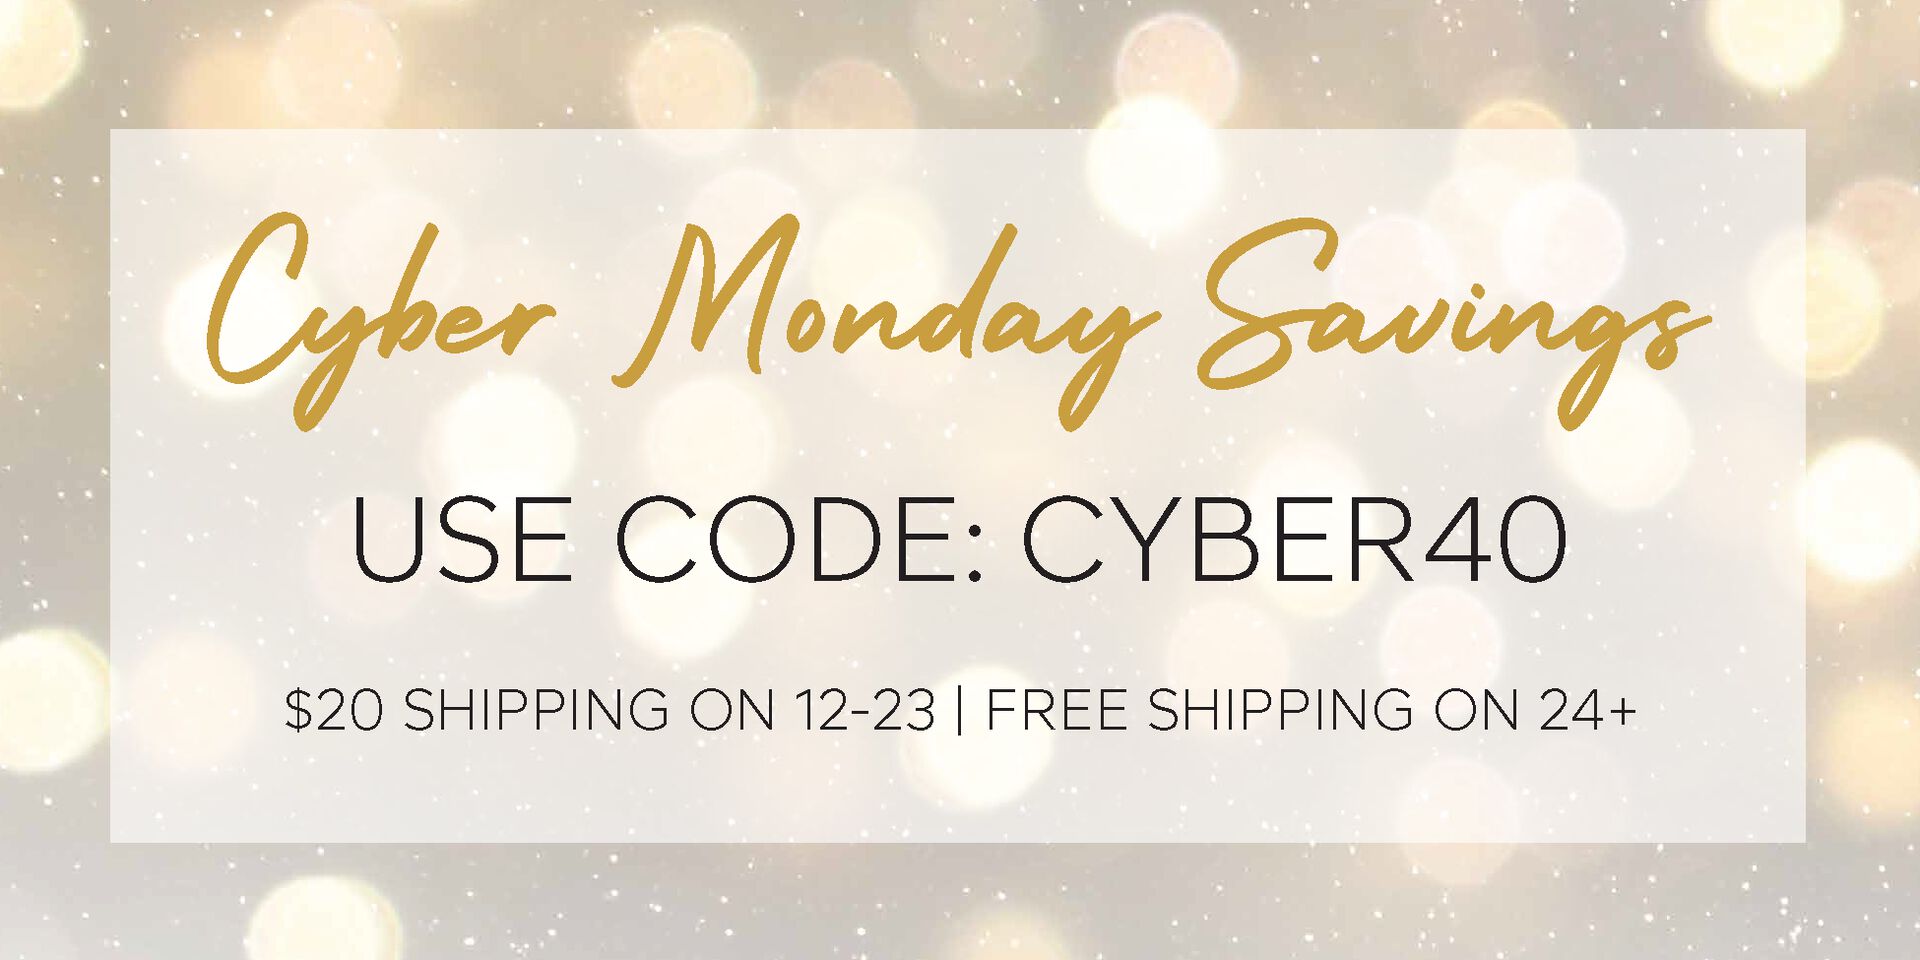 Cyber Monday Savings, use code: CYBER40